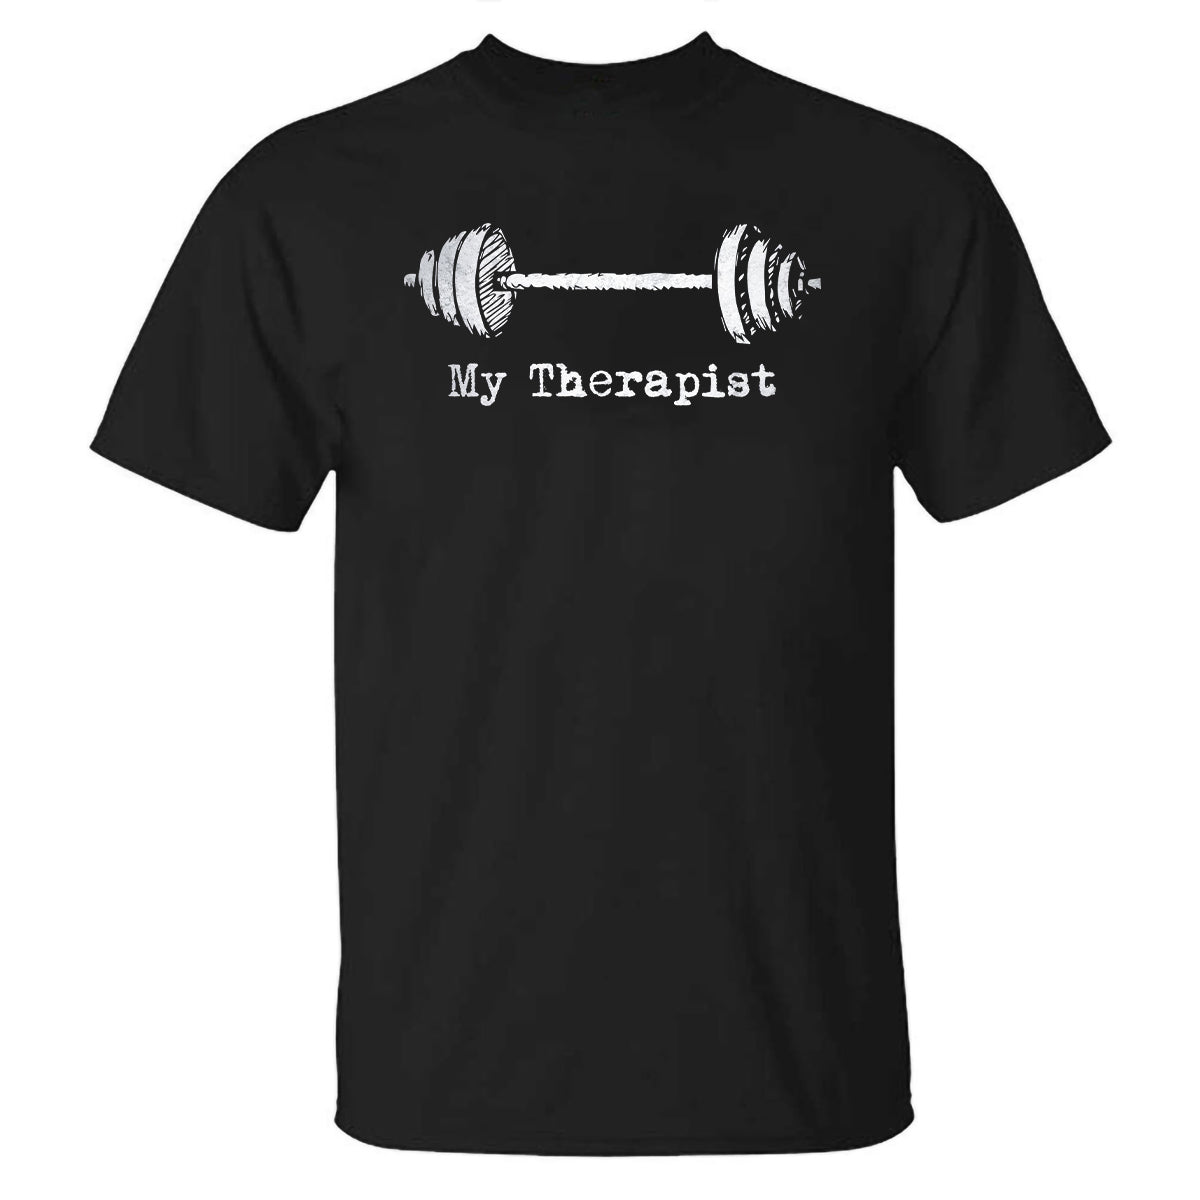 My Therapist Printed Men's T-shirt